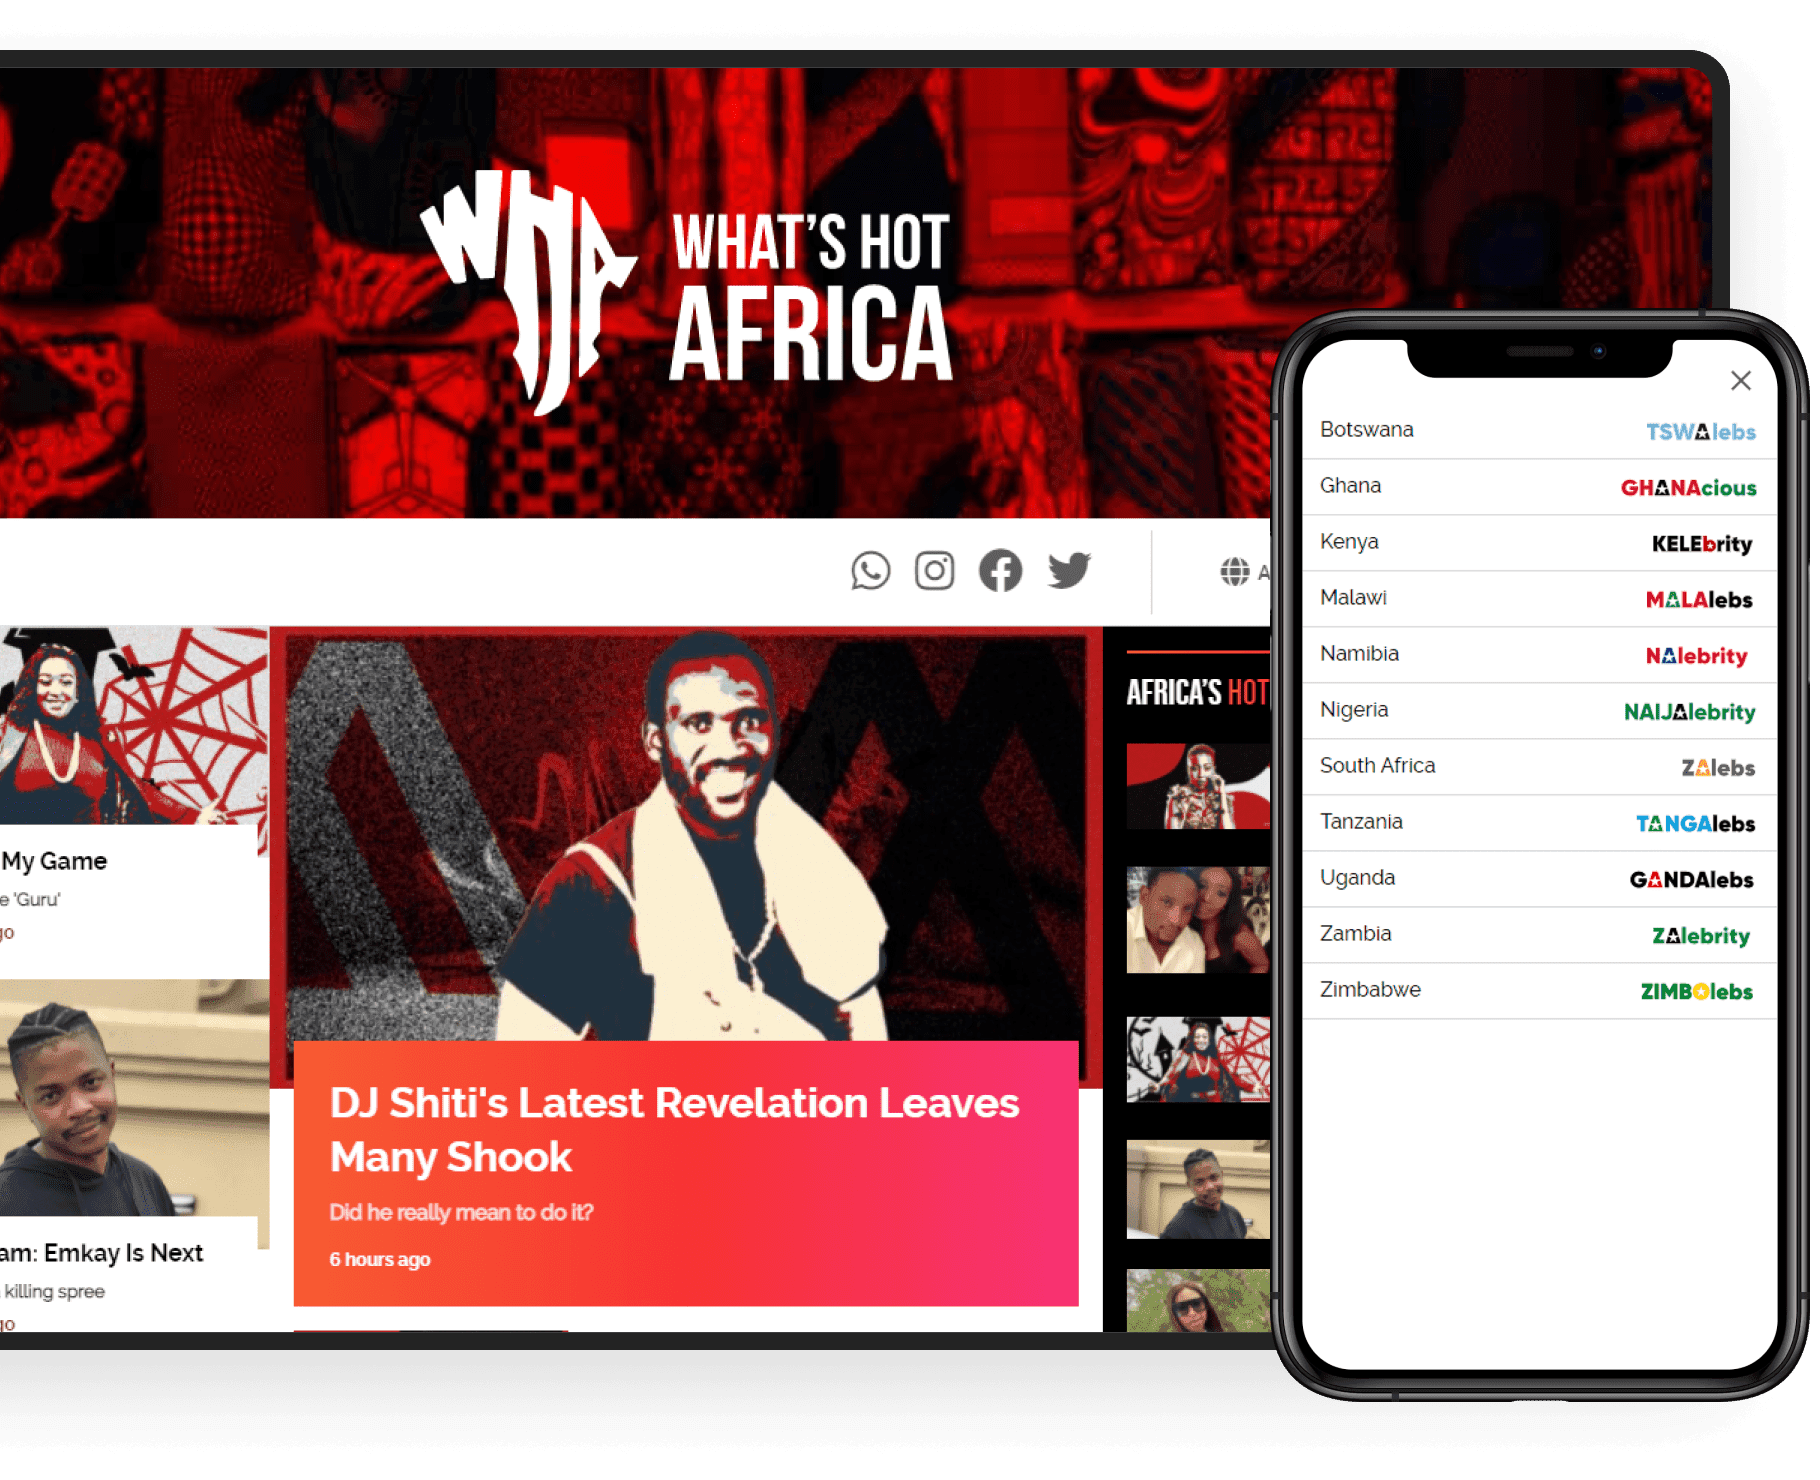 Multi-location news portal in Africa